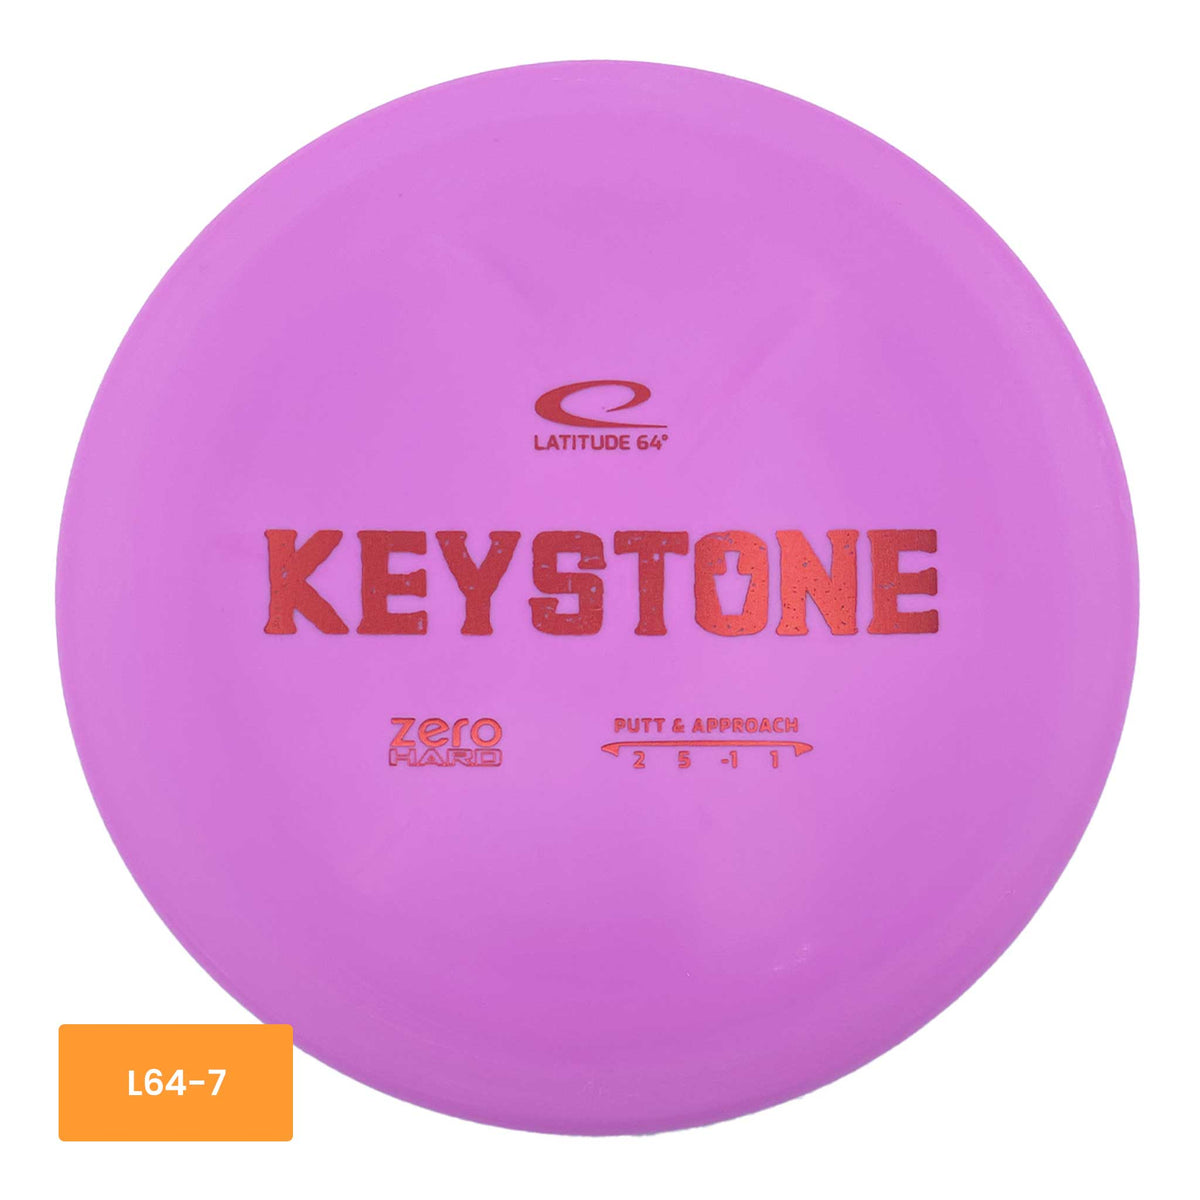 Latitude 64 Zero Hard Keystone putter and approach - Pink